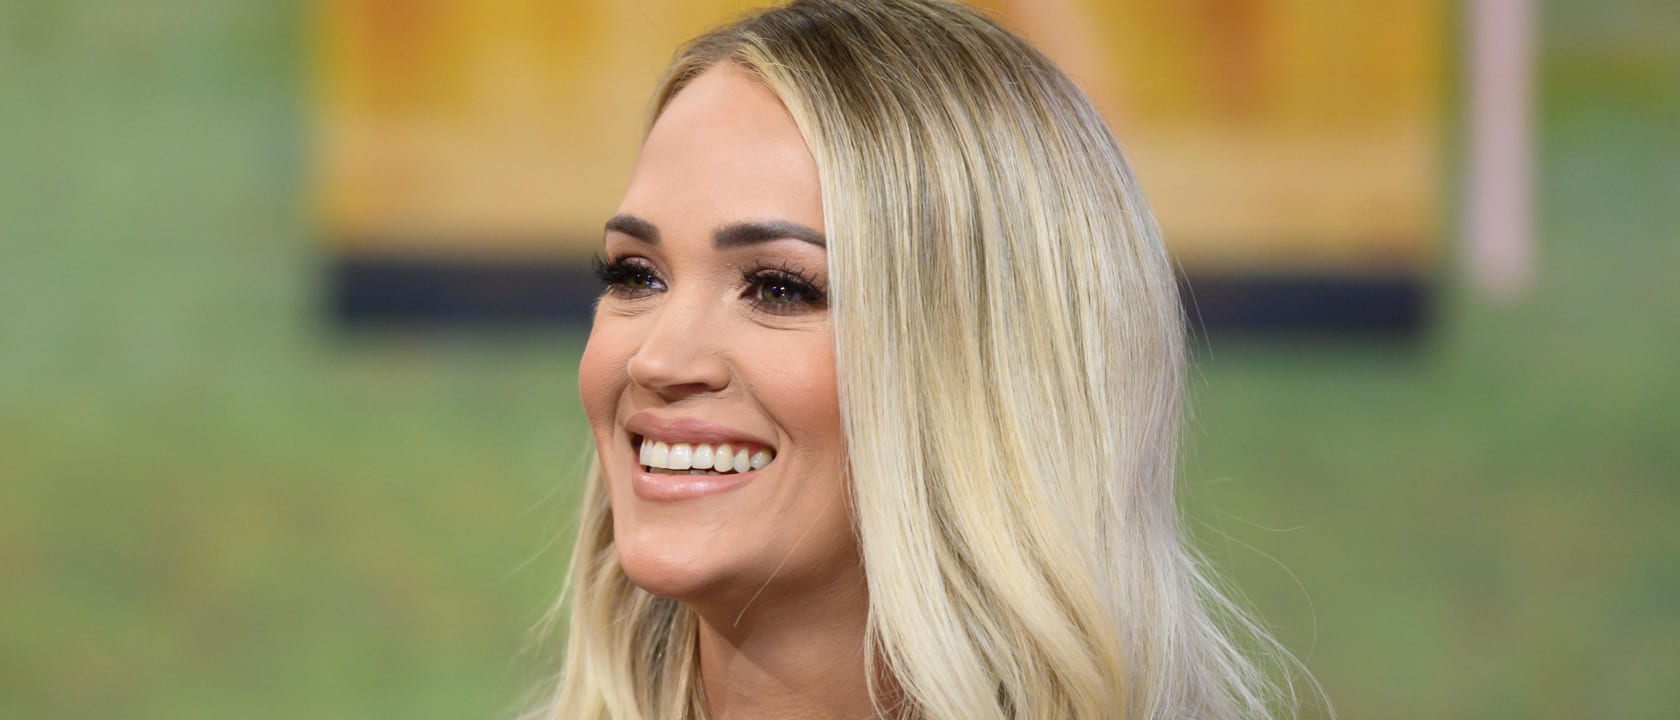 Carrie Underwood World Tour 2022 Merch, Carrie Underwood Love Wins